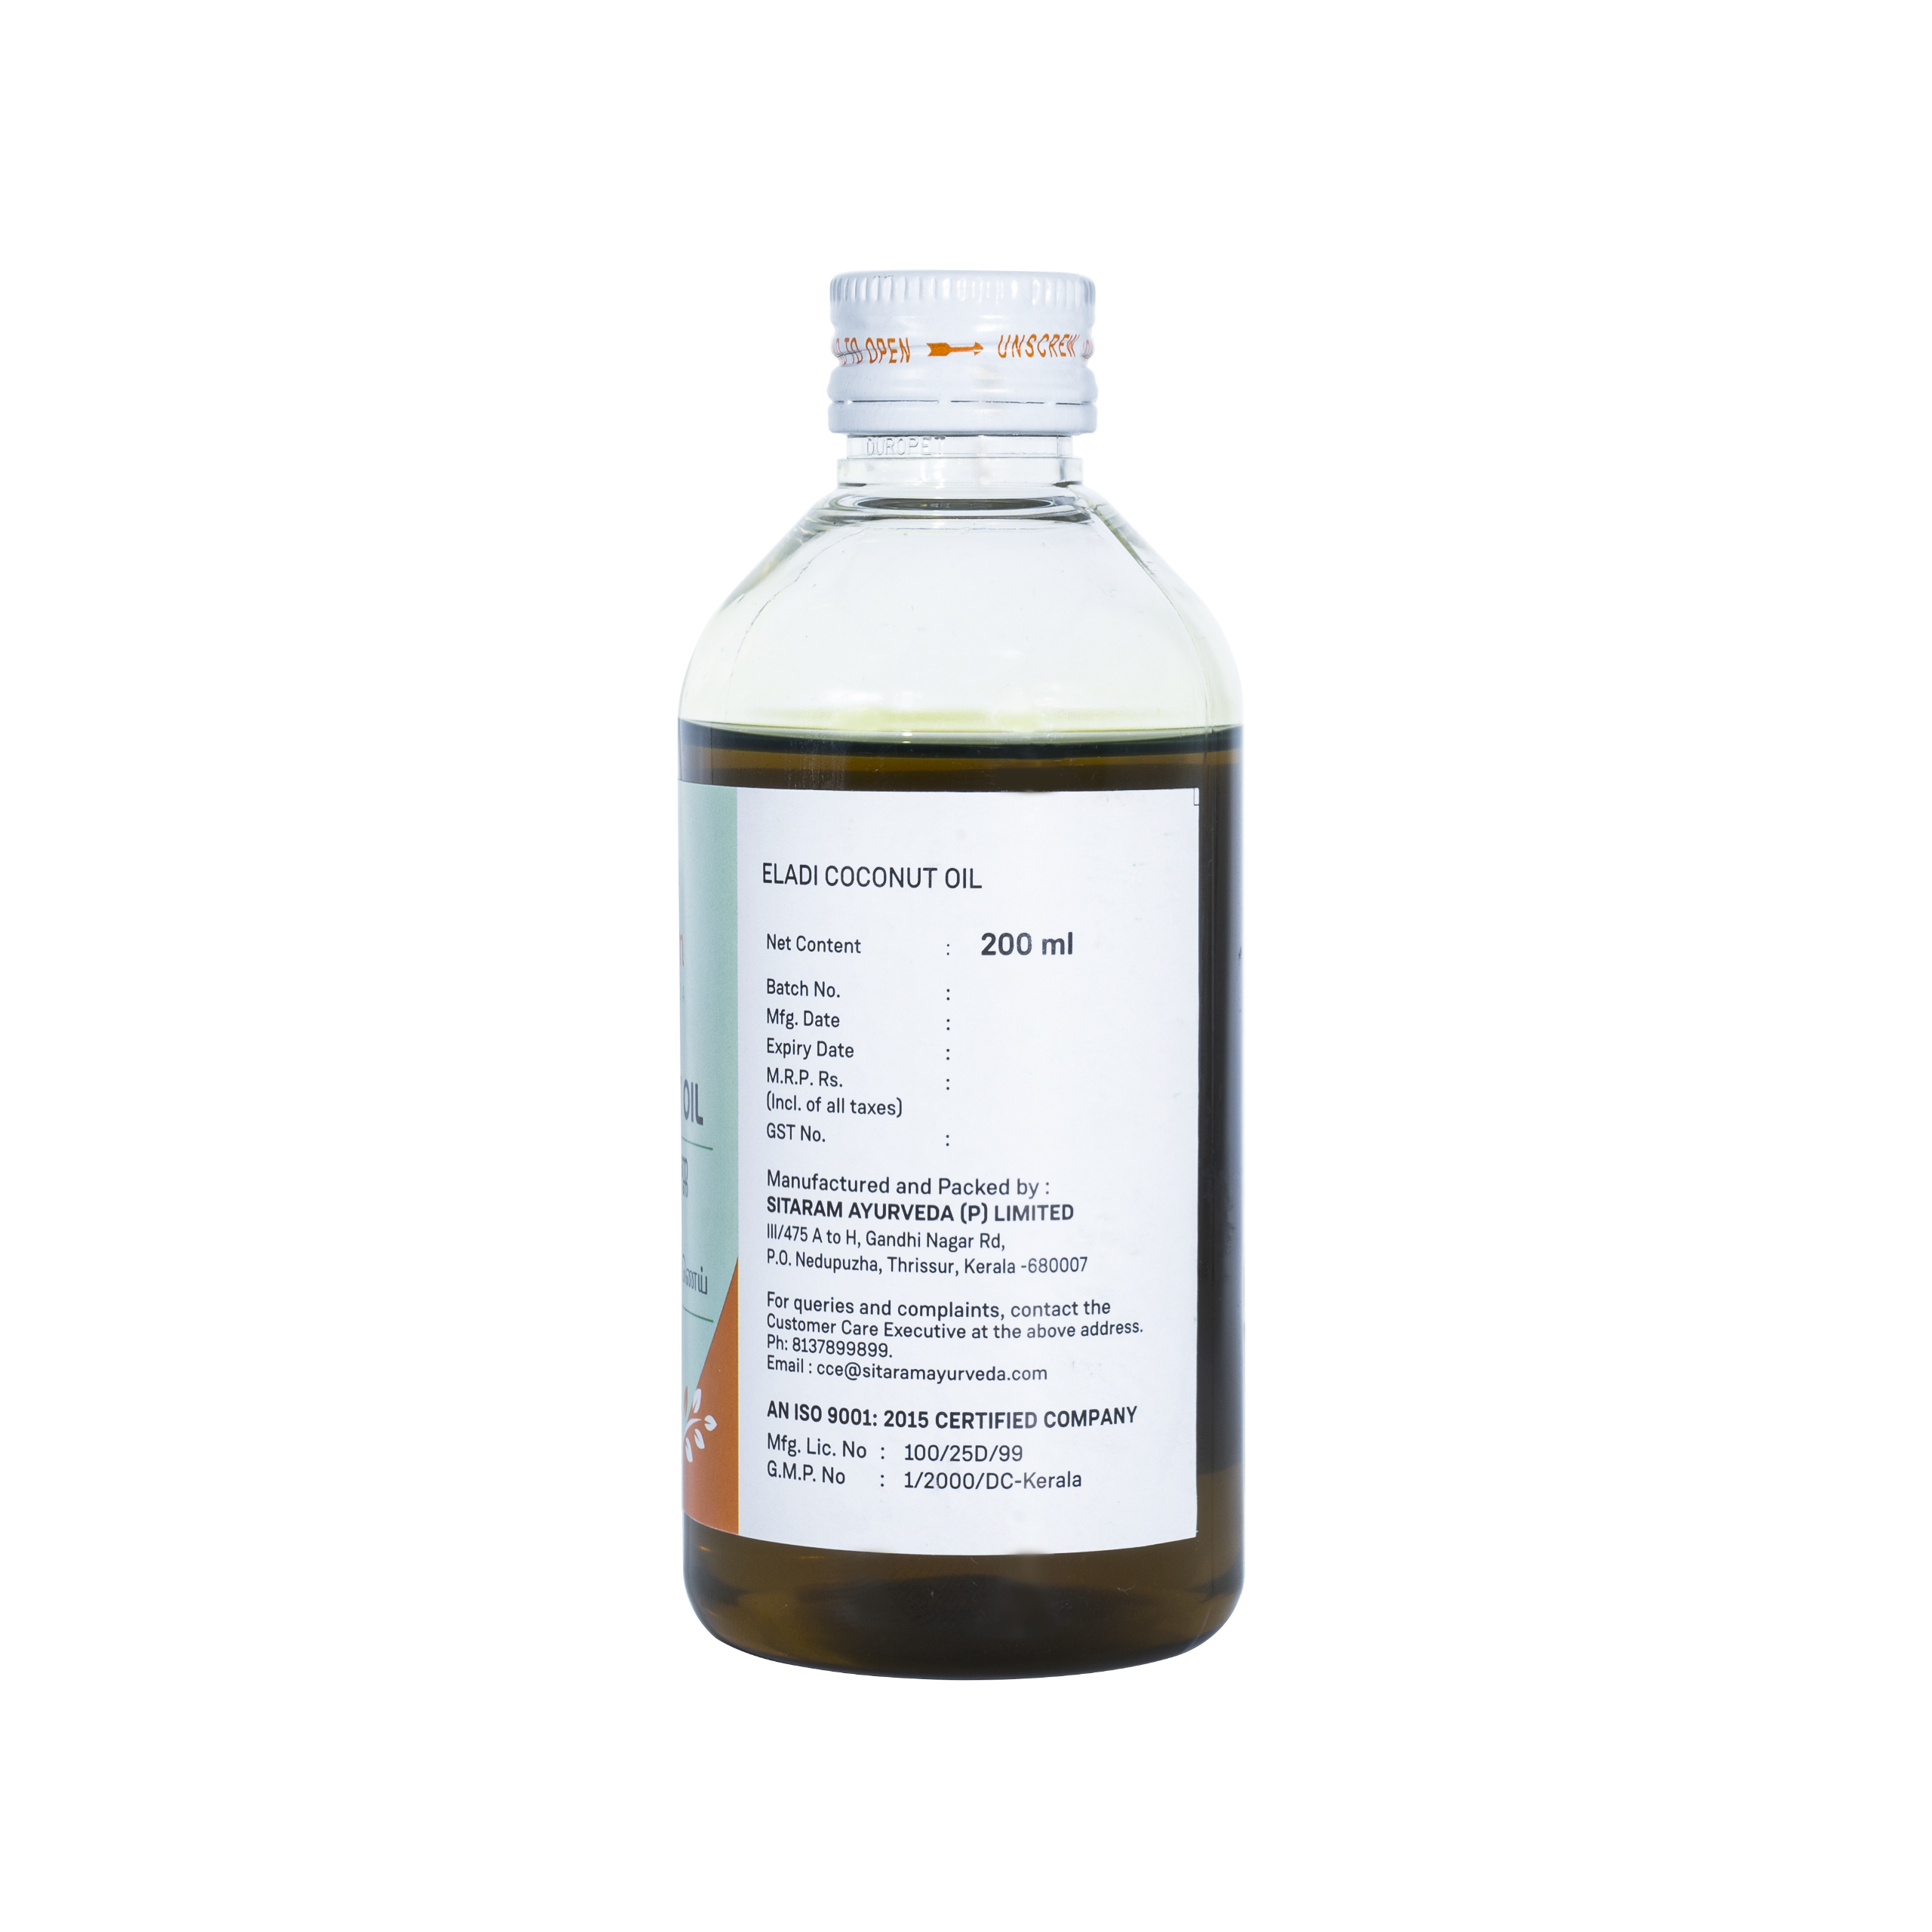 Sitaram Ayurveda Eladi Coconut Oil 200Ml (Prescription Medication)